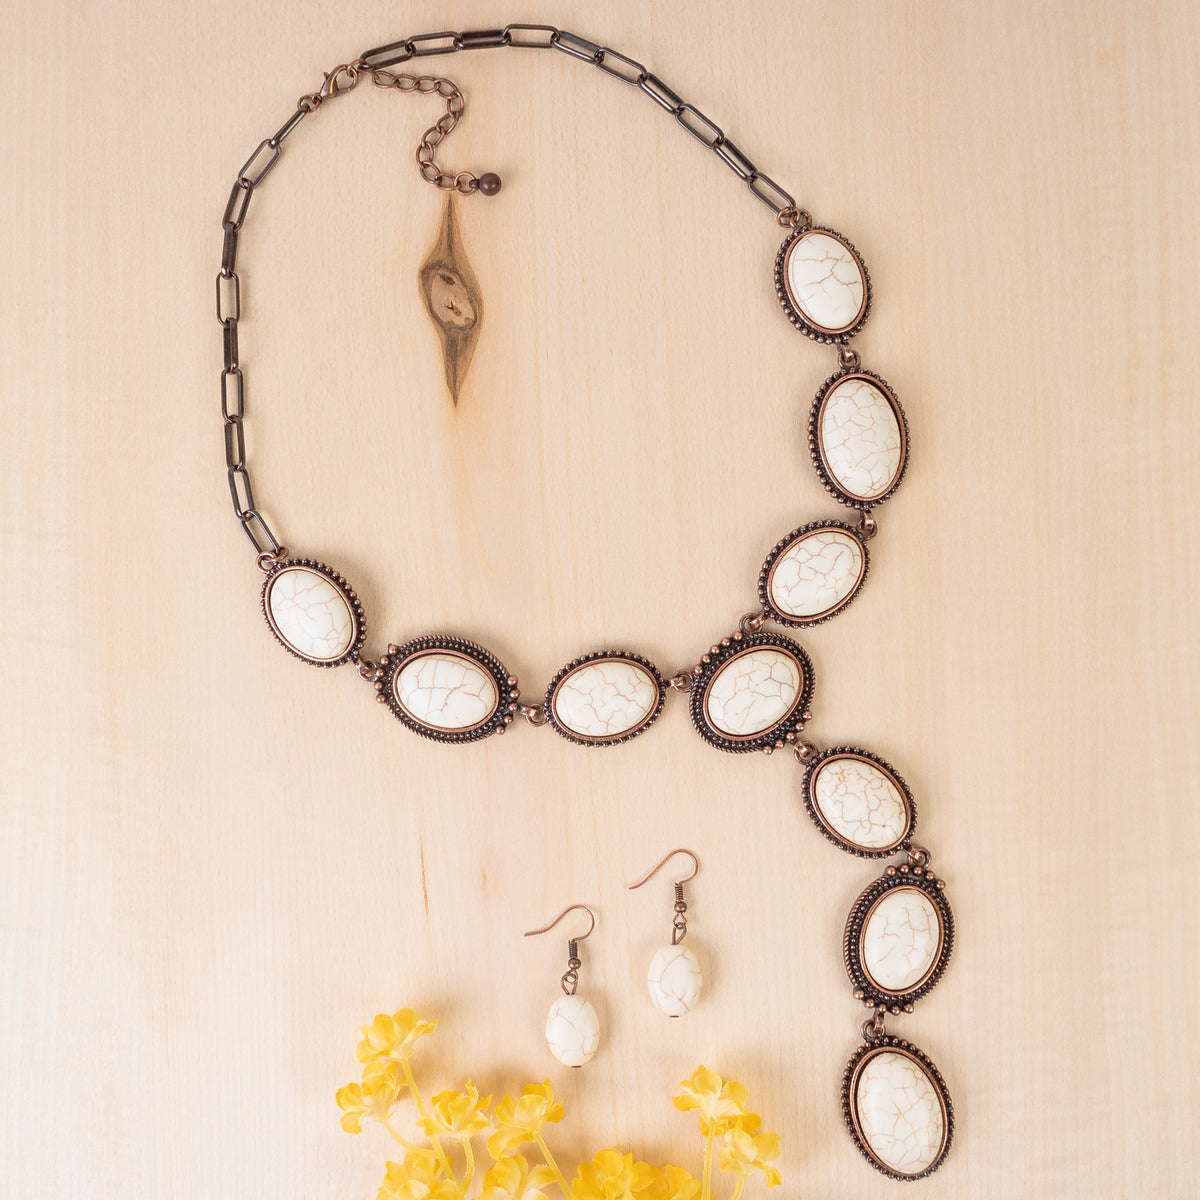 92011 - Squash Blossom Necklace - Ivory & Copper